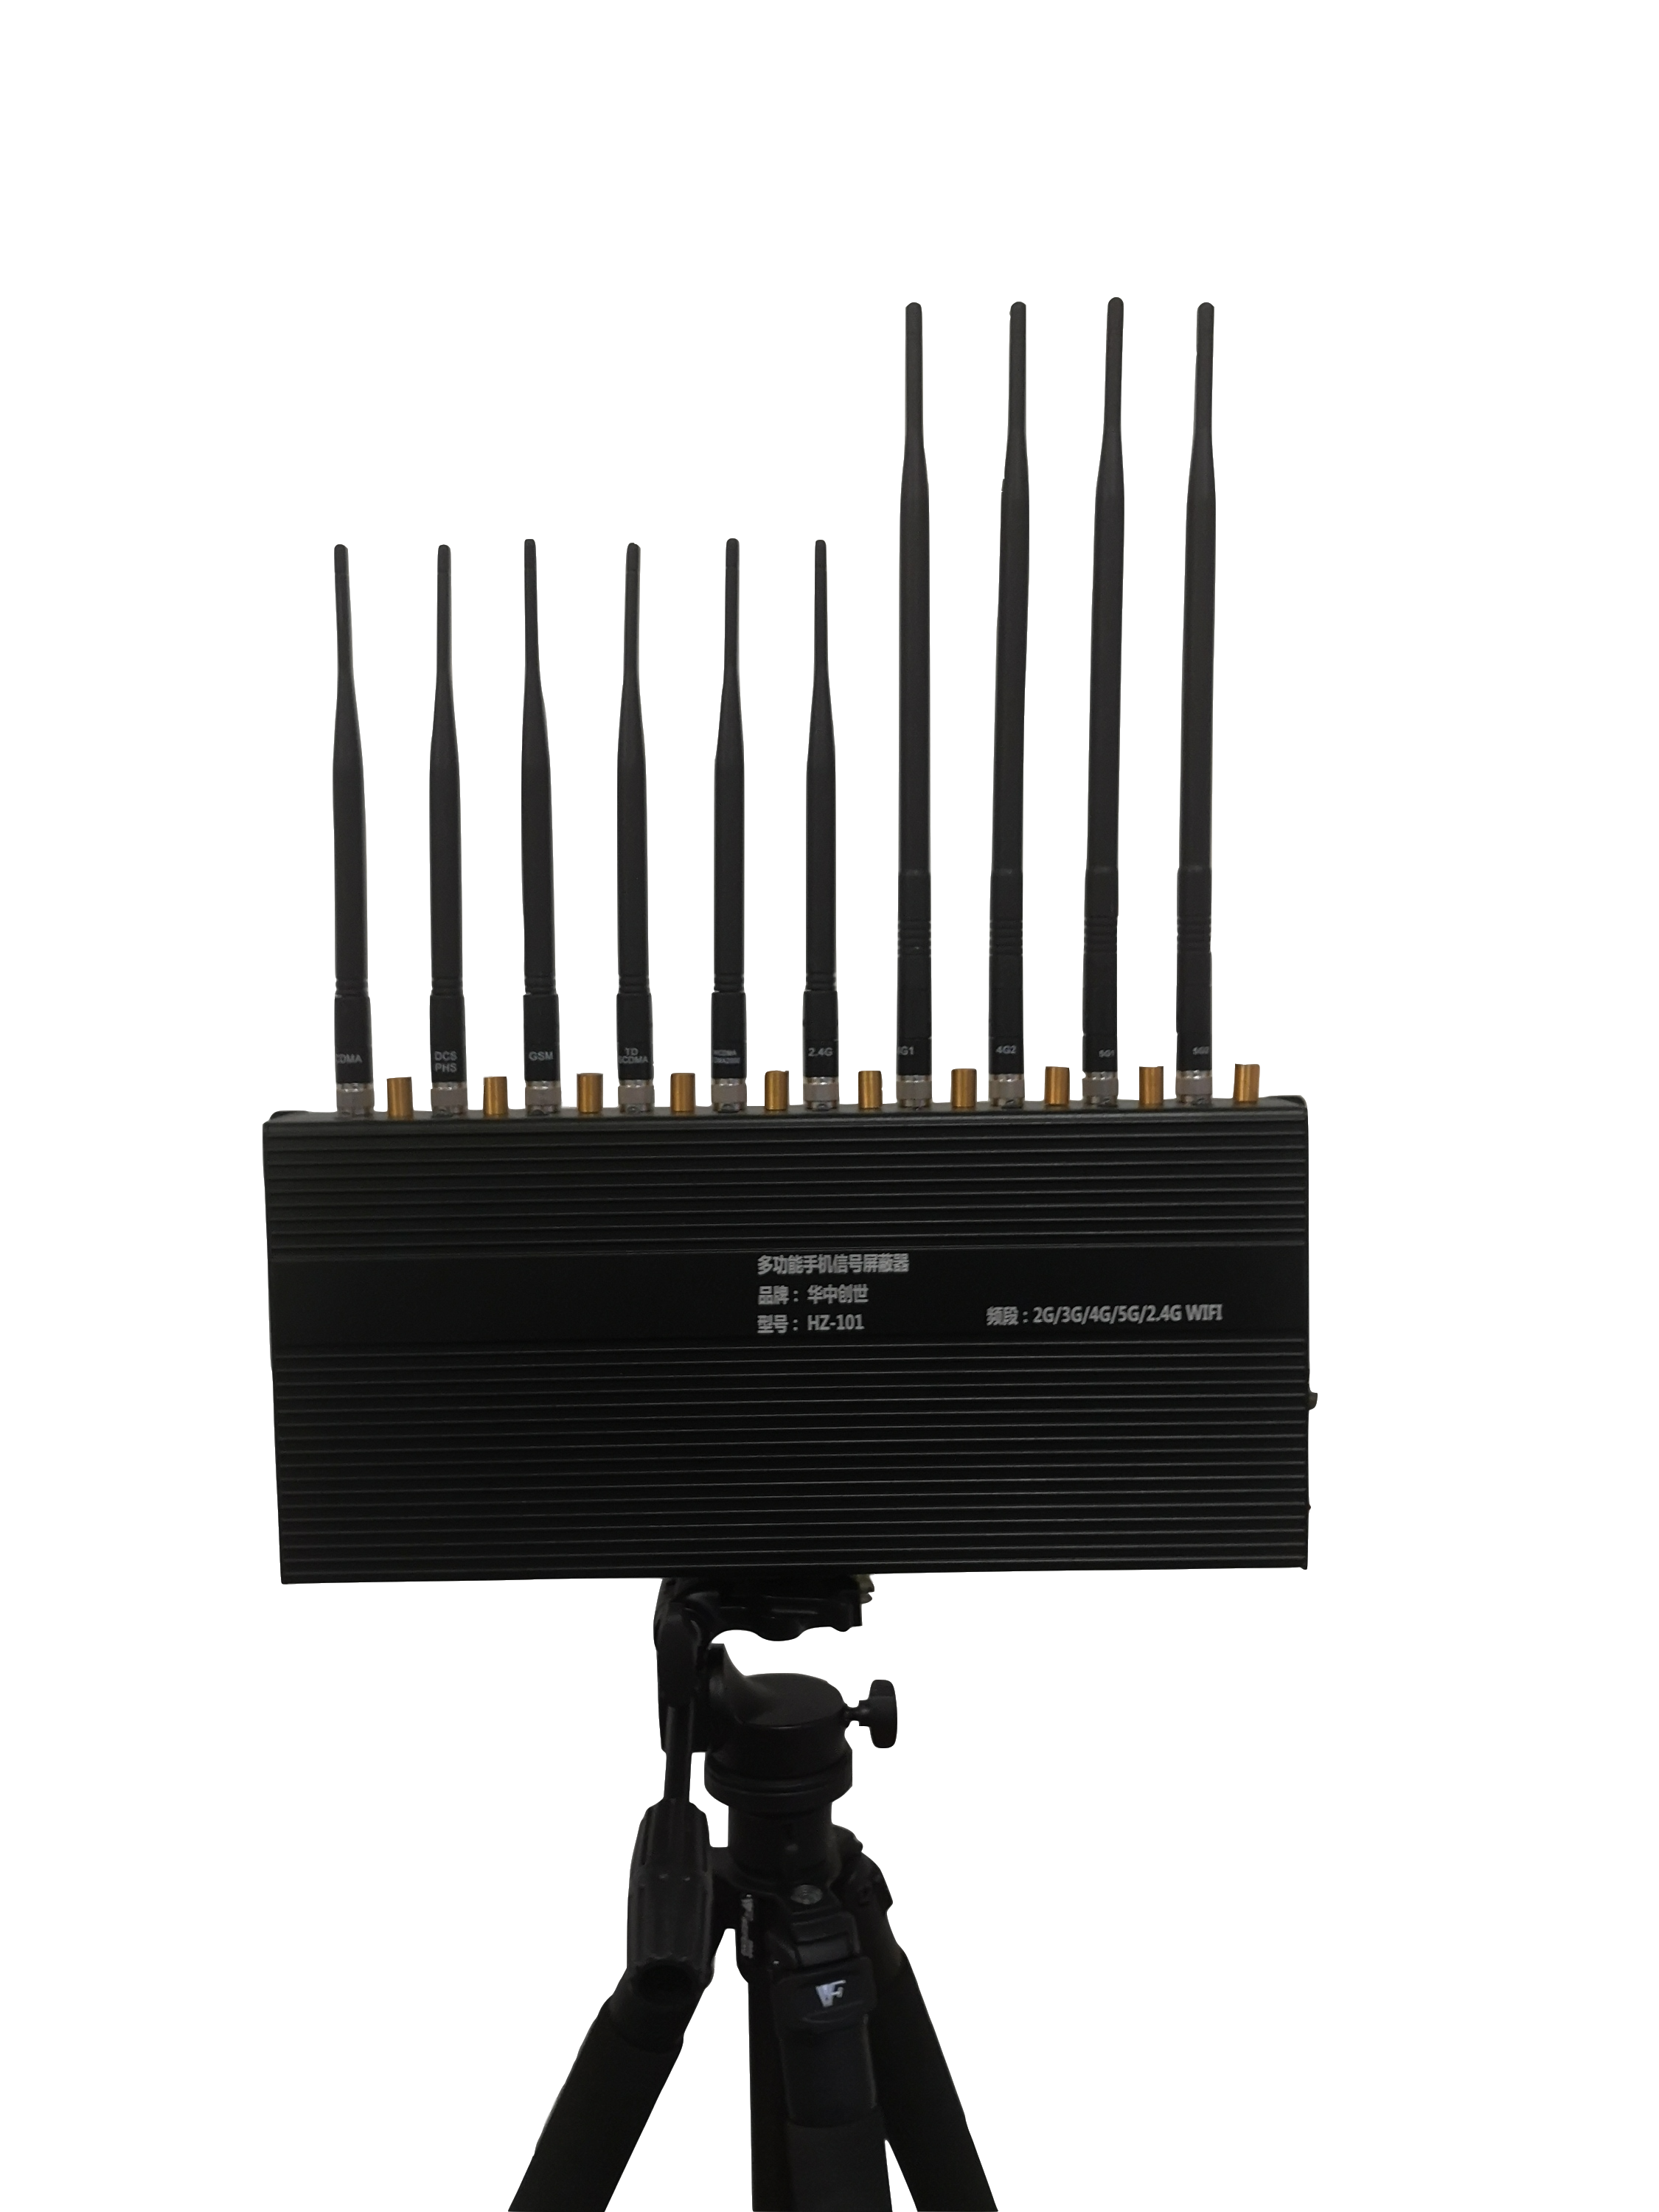 HZ-101  多功能信号手机屏蔽器 2G/3G/4G/5G/2.4WIIF全向型